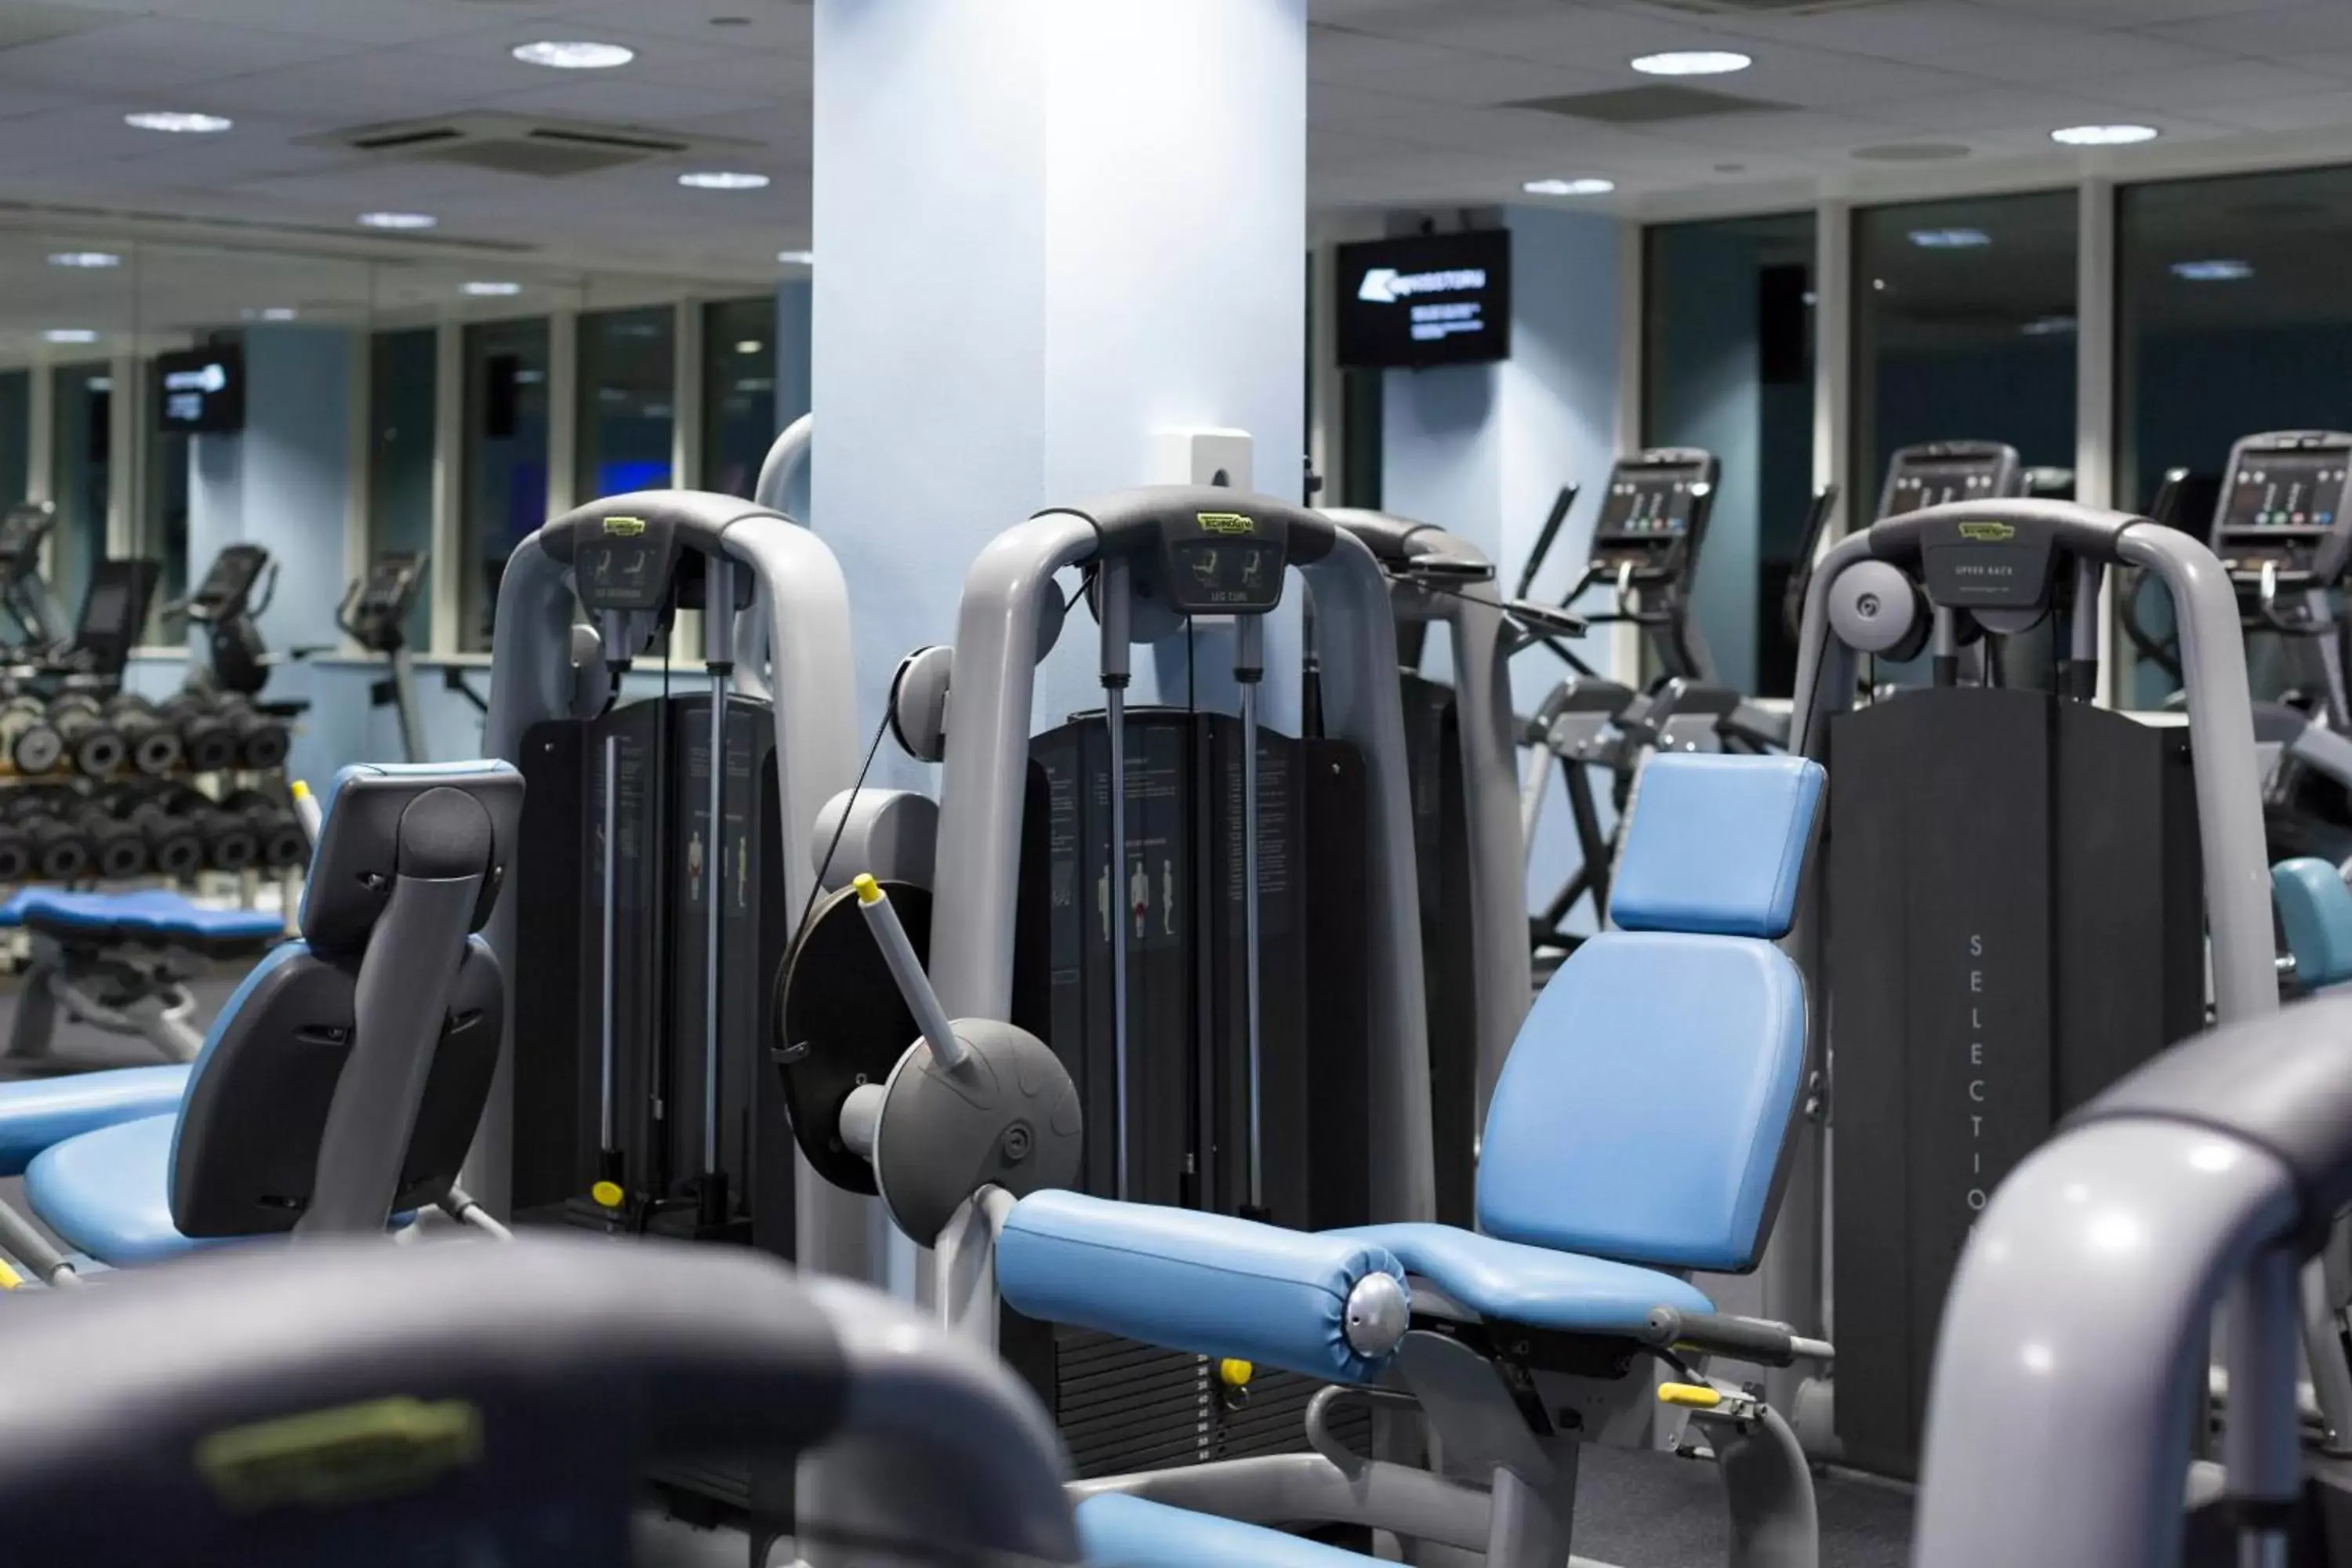 Fitness centre/facilities, Fitness Center/Facilities in Leonardo Royal Southampton Grand Harbour